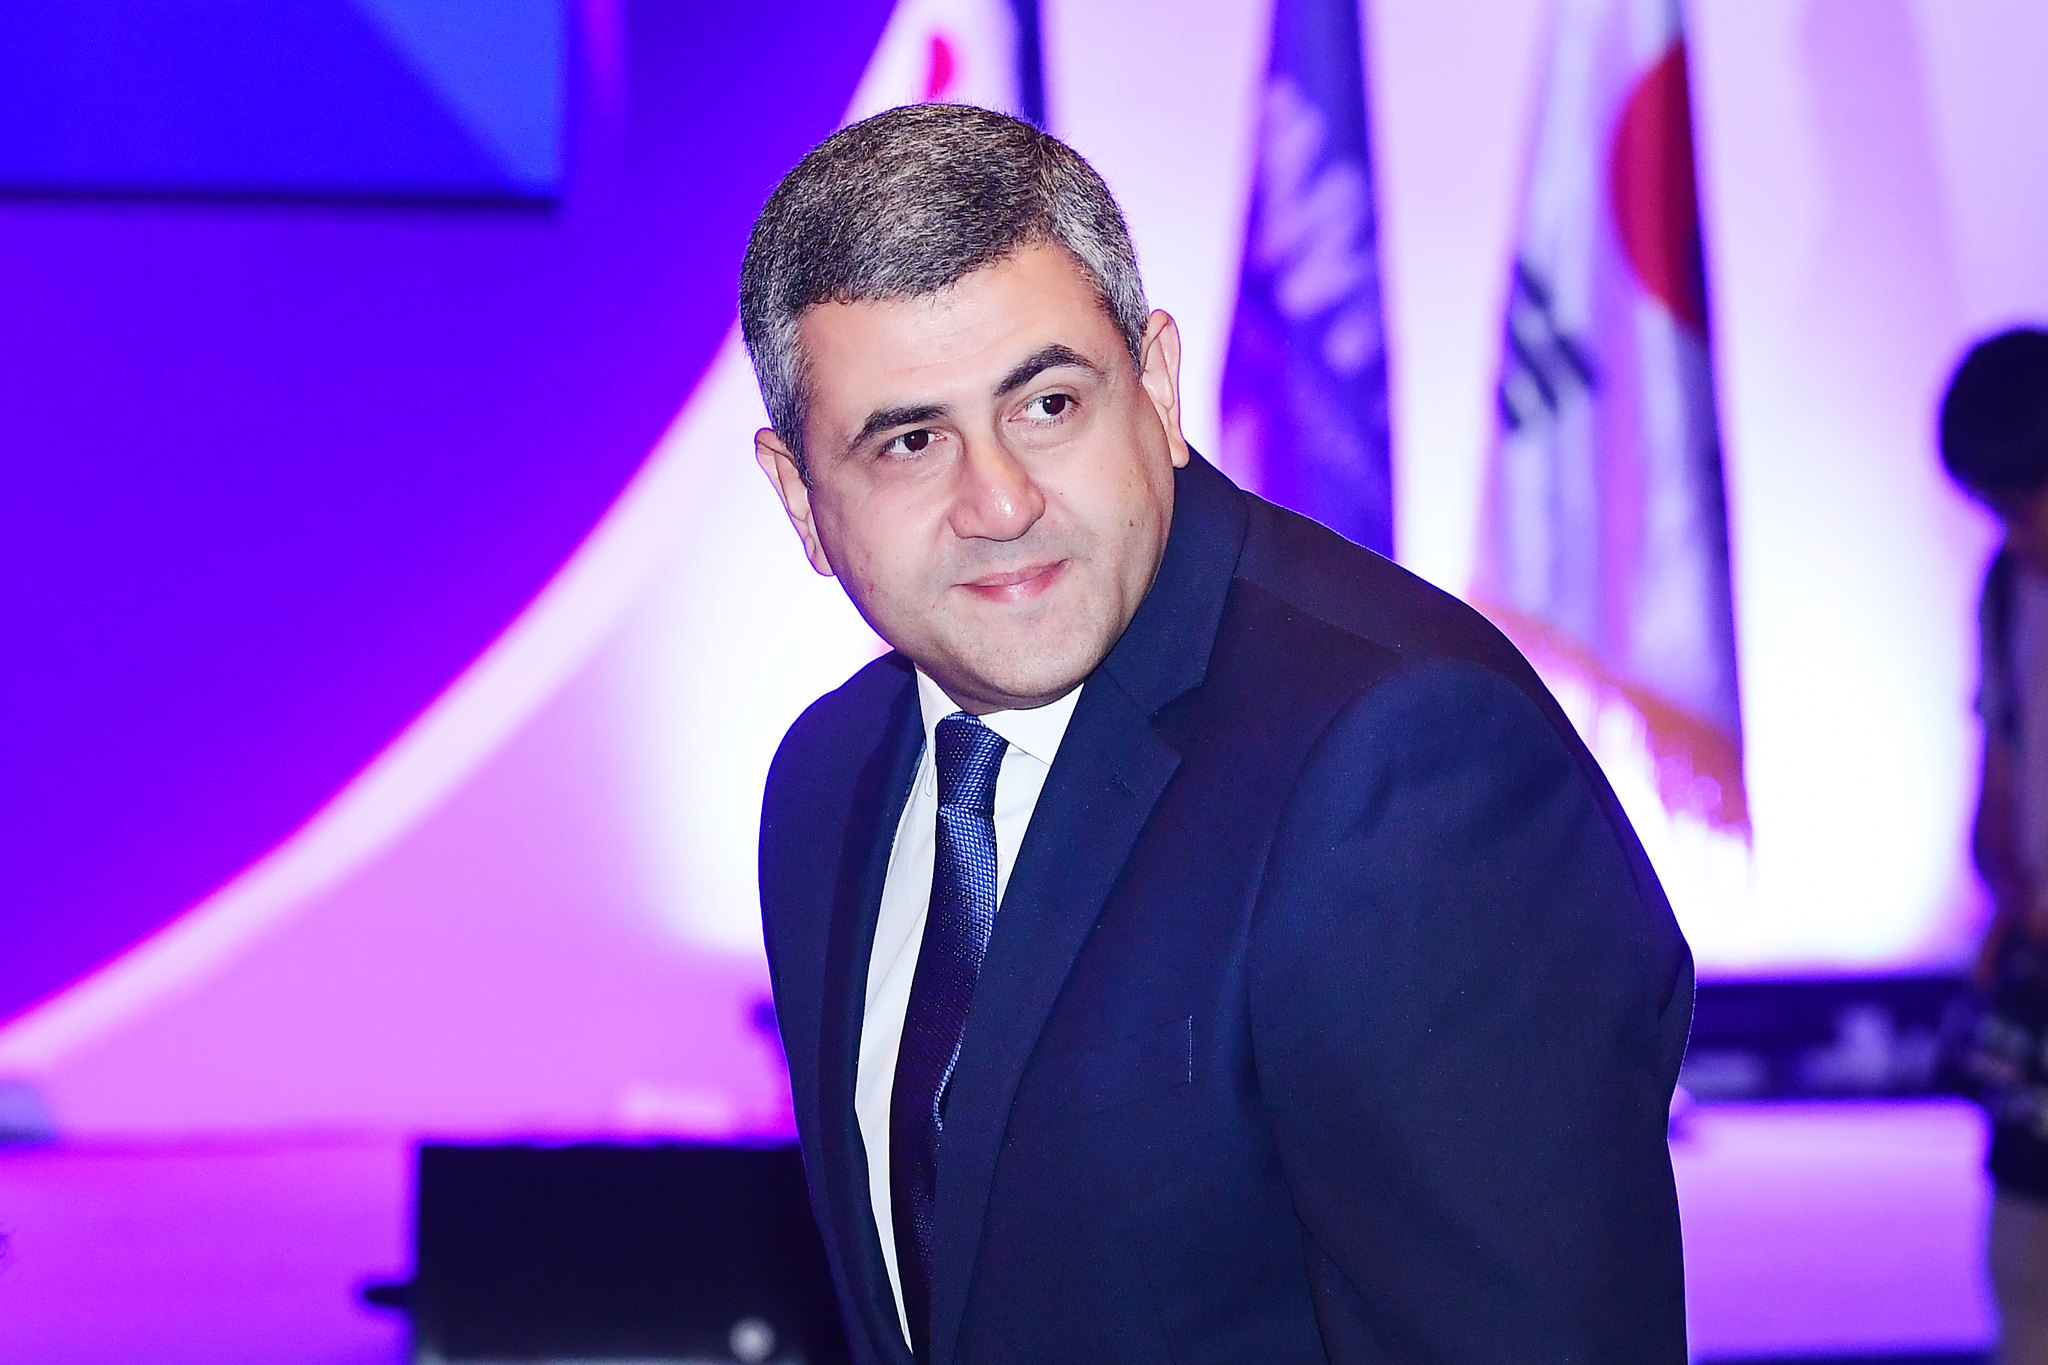 Exclusive Insights: UNWTO Secretary-General Zurab Pololikashvili on the Future of Global Tourism